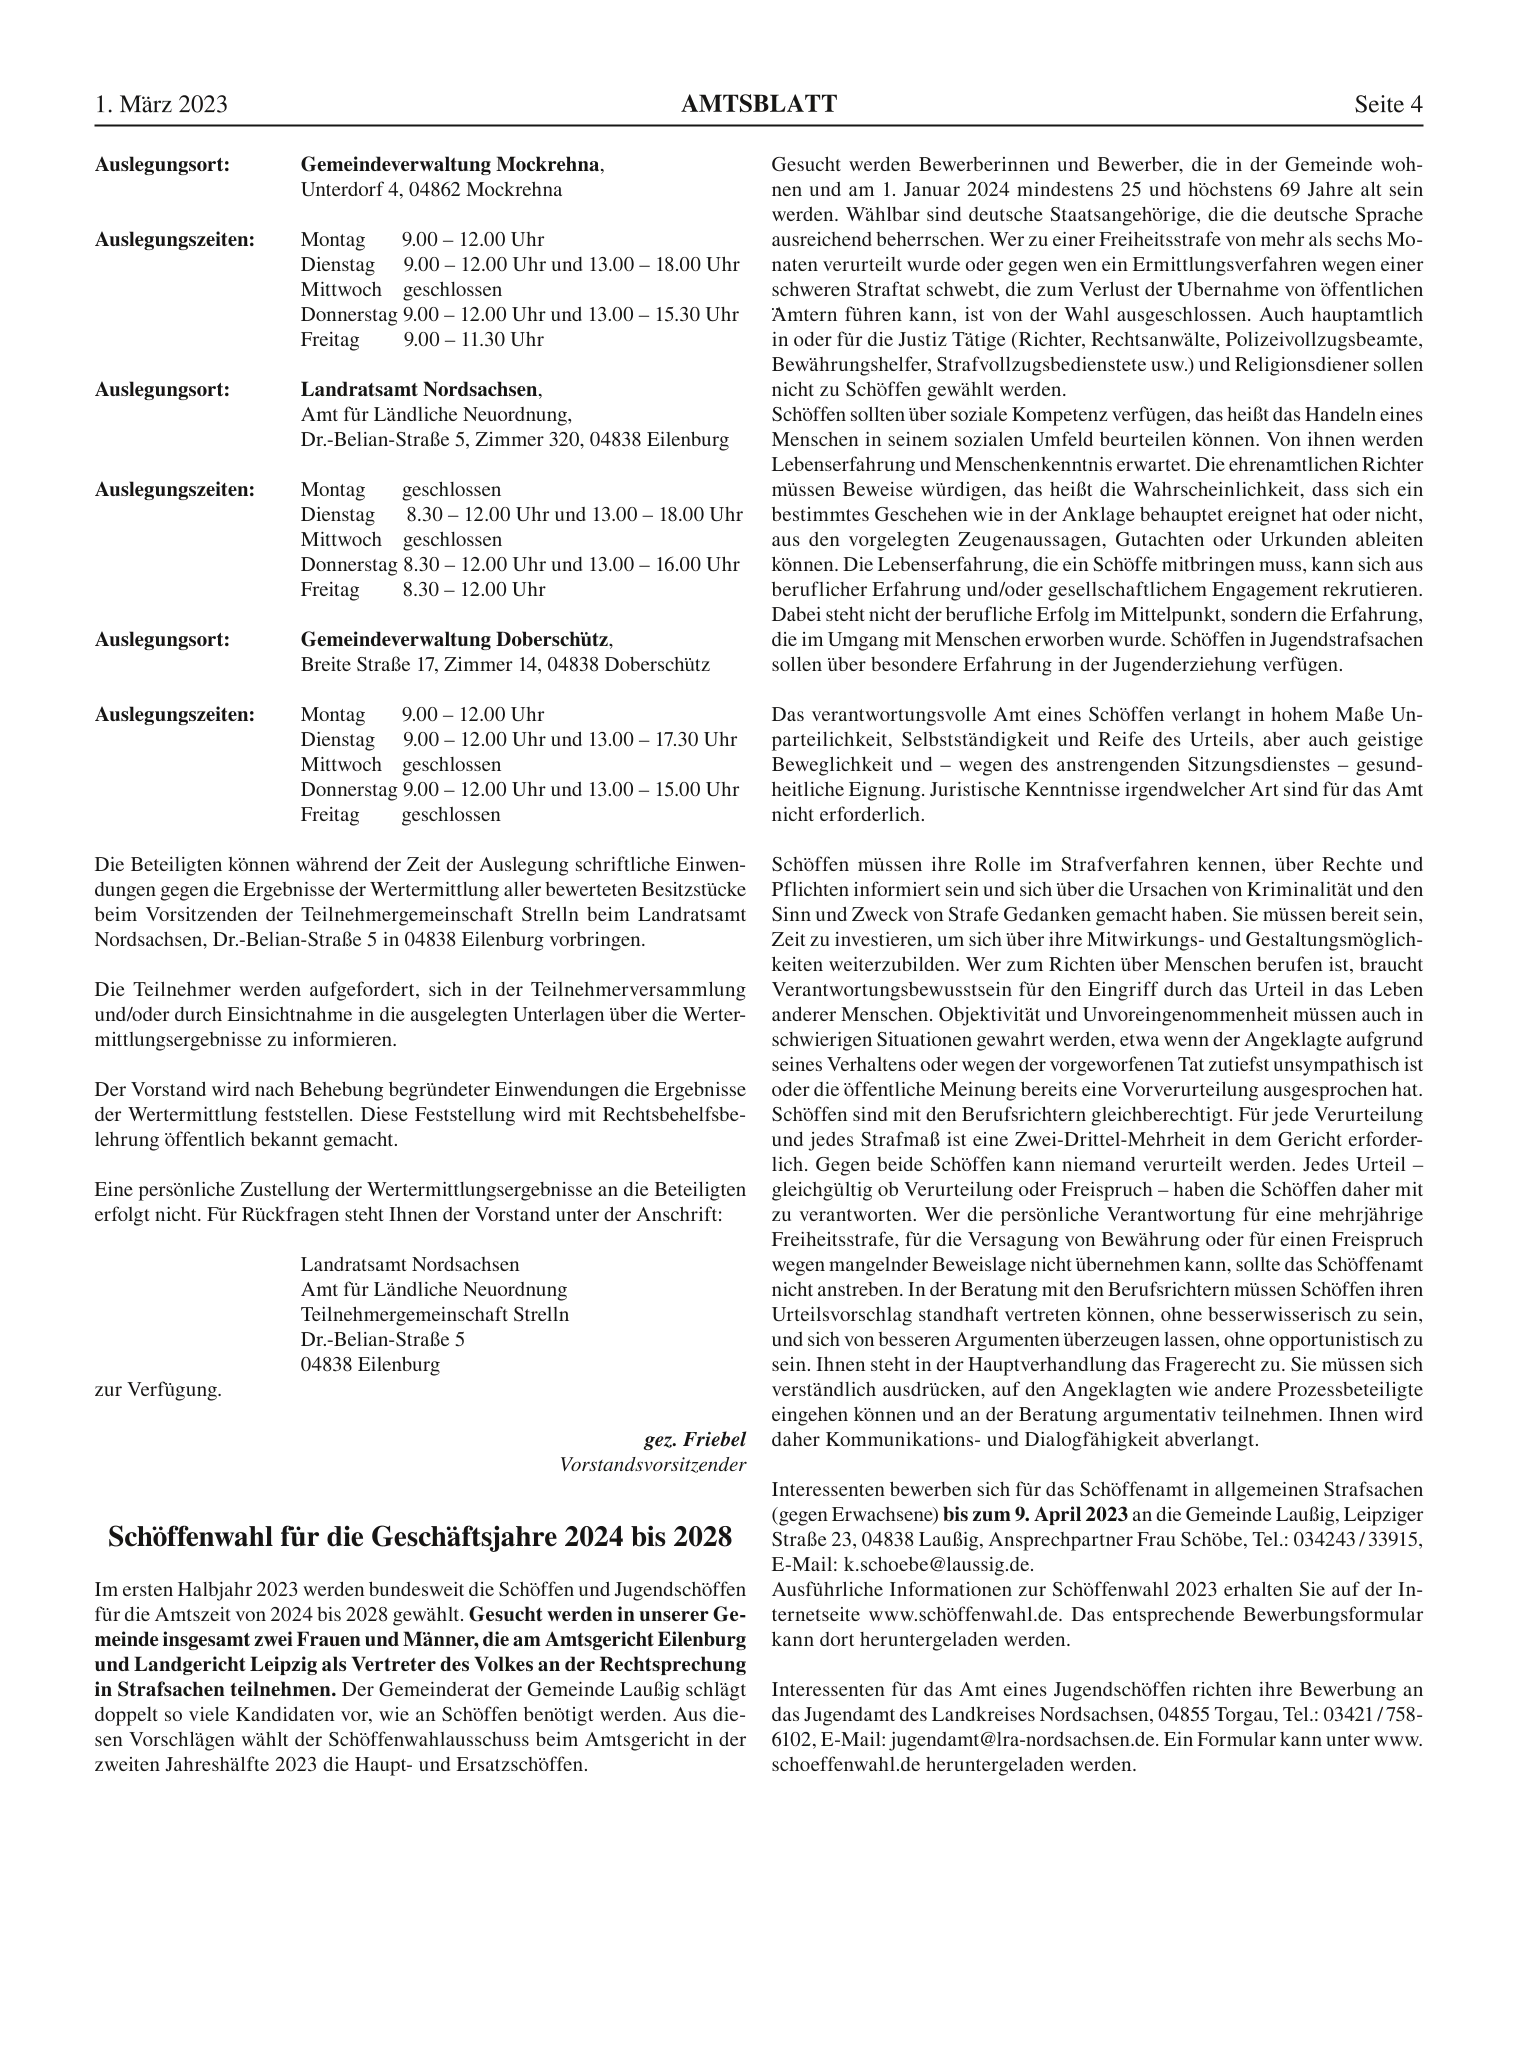 Amtsblatt Nr. 2/2023 vom 01.03.2023 Seite 3